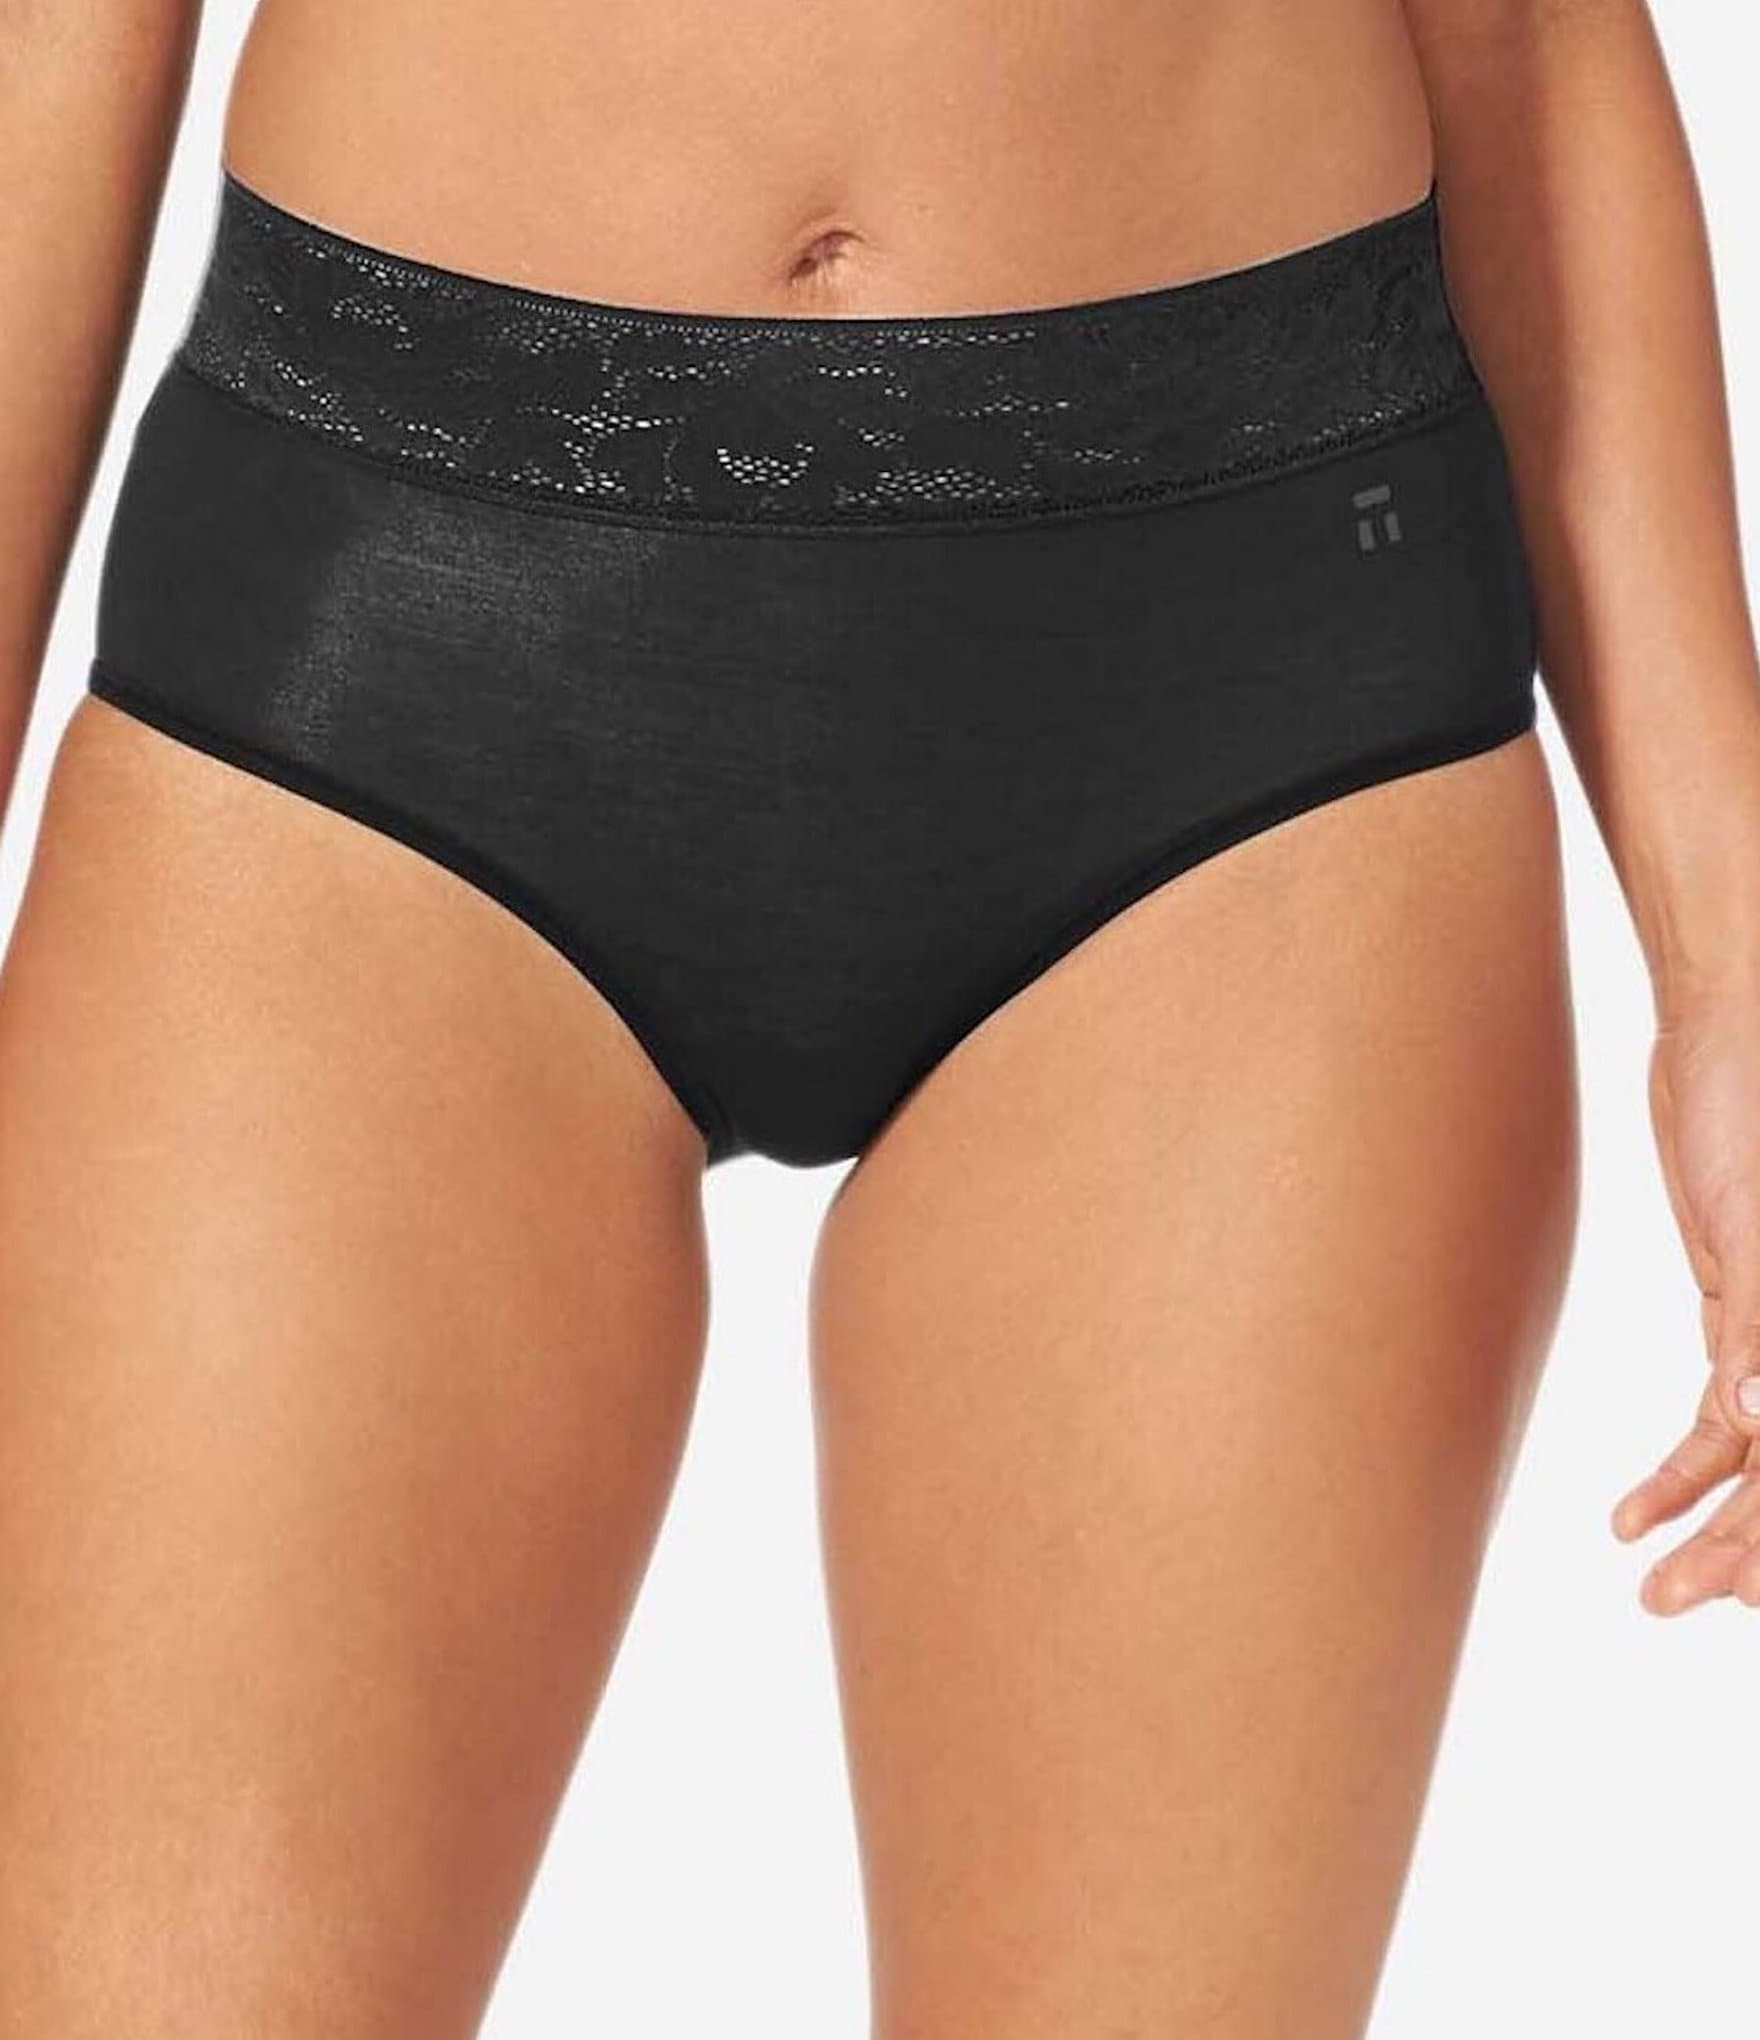 Jockey Women's Underwear Soft Touch Lace Modal Hi Cut, Black, S at